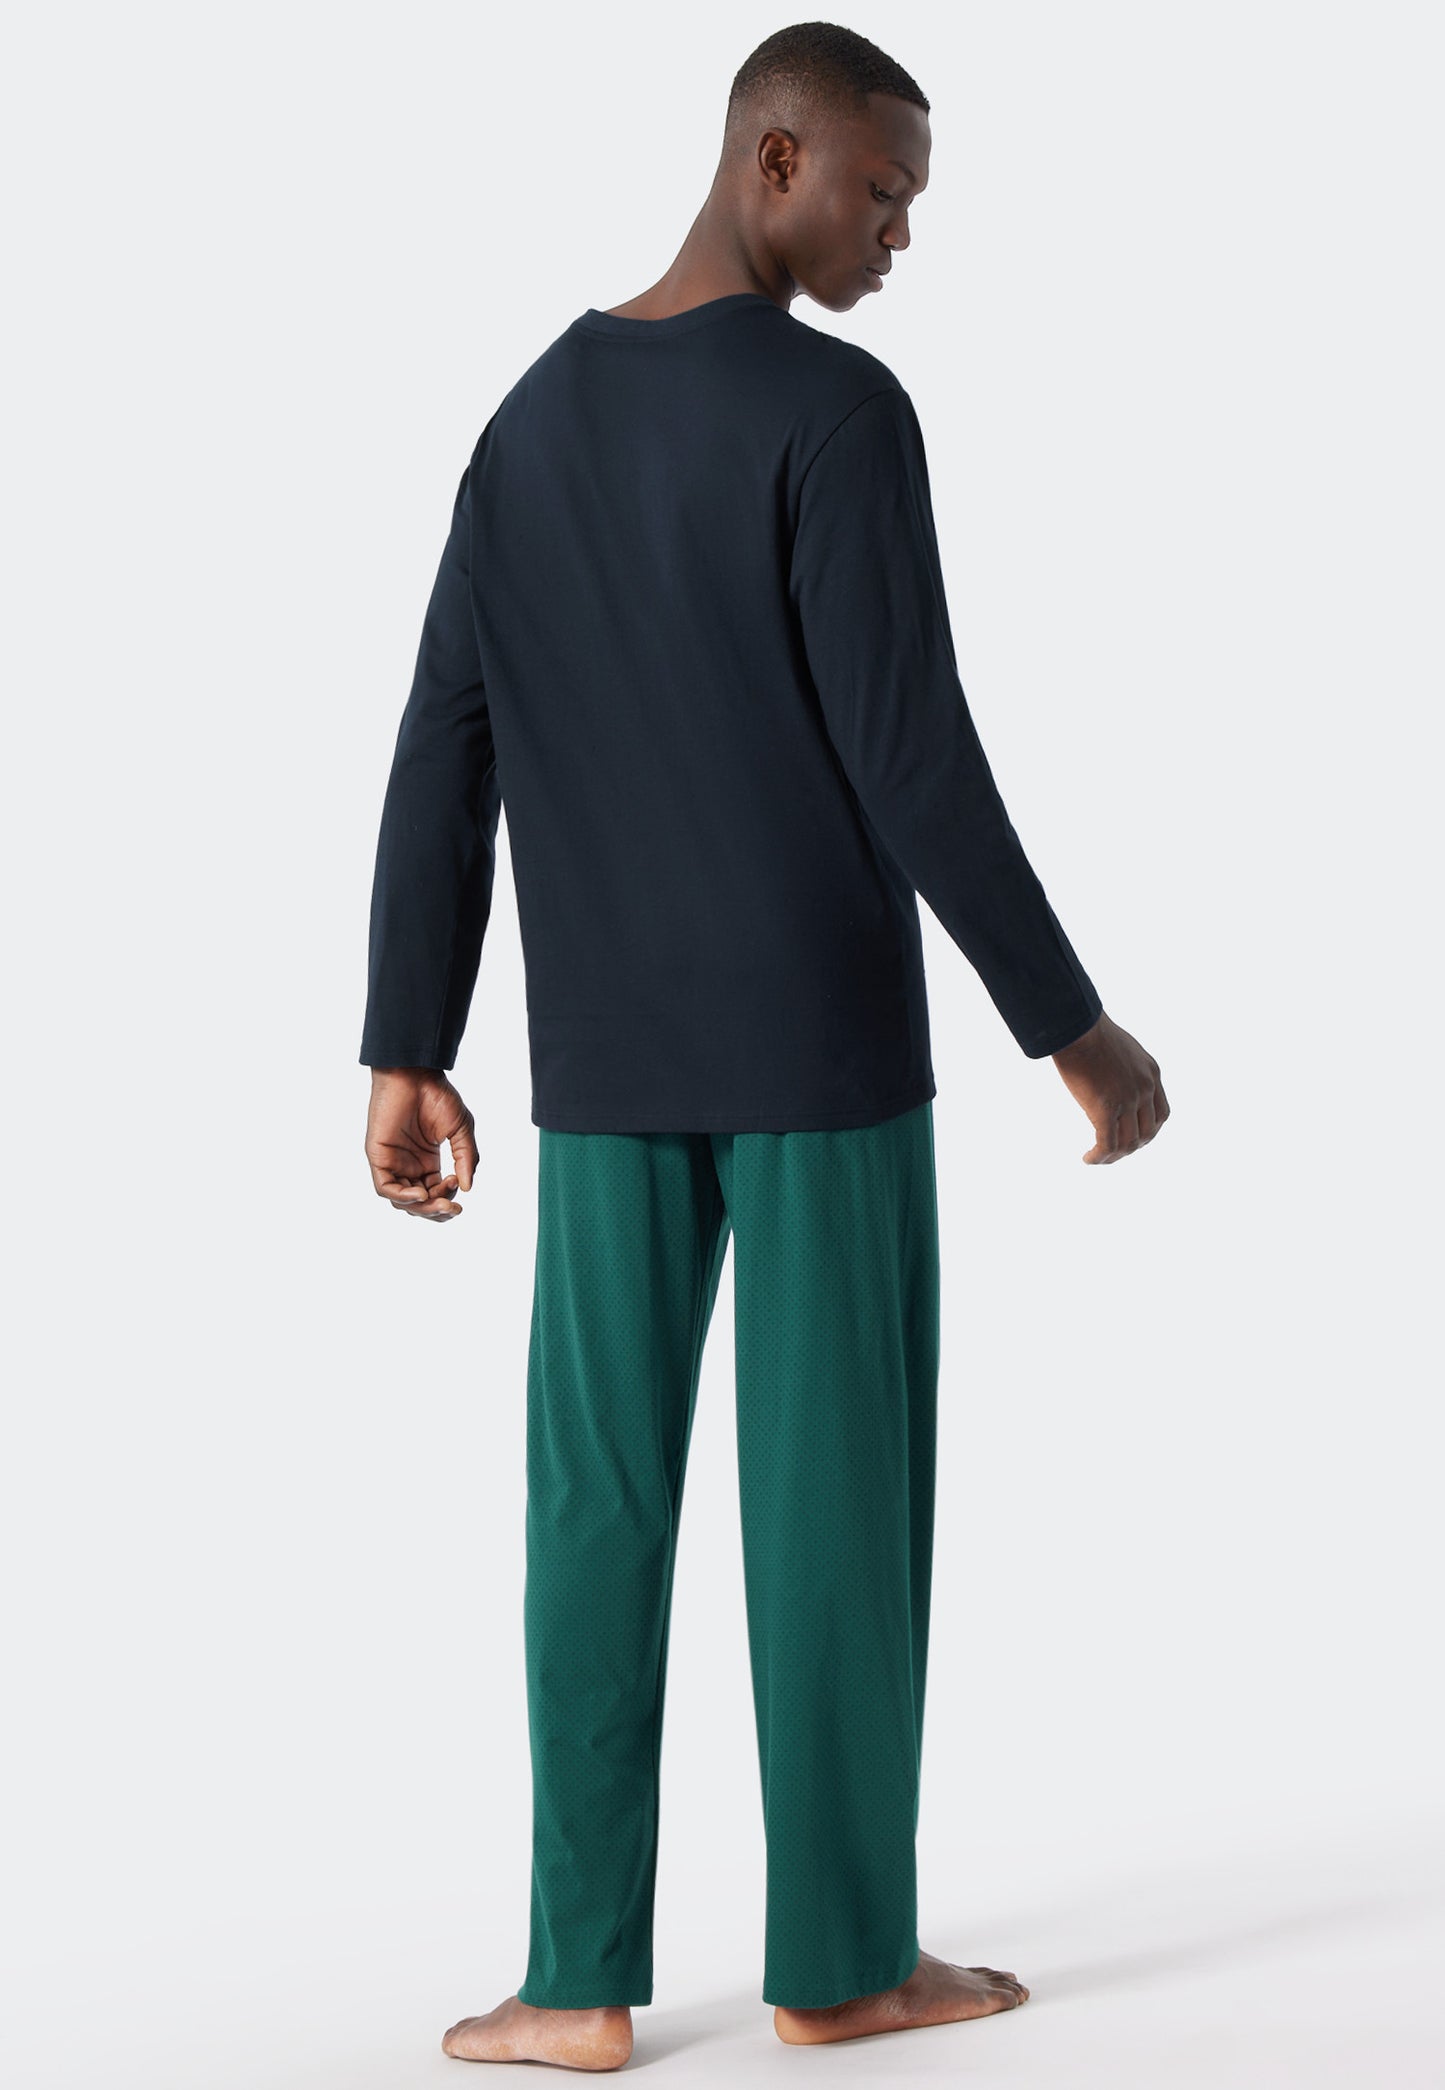 Pyjama long encolure en V à motifs vert foncé/bleu foncé - Essentials Nightwear